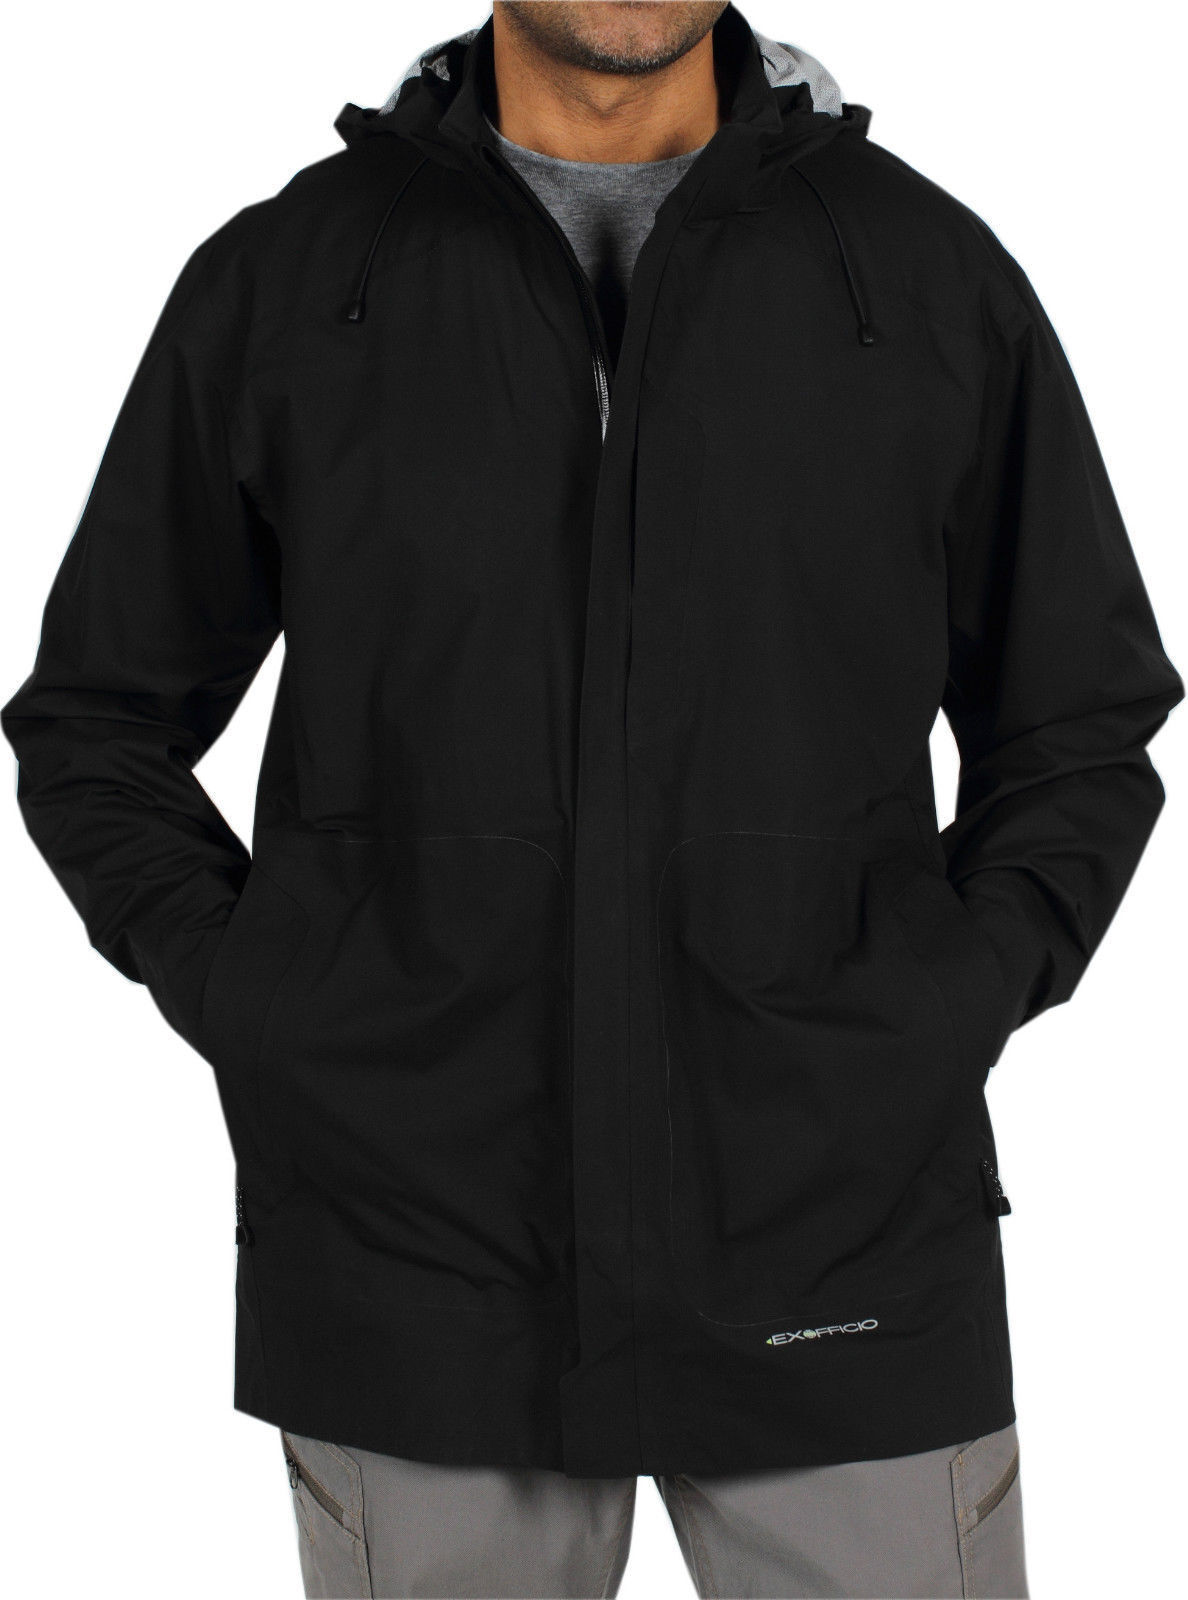 ExOfficio,Mens Rain Logic Parka Jacket Coat 100% Waterproof - Black - M